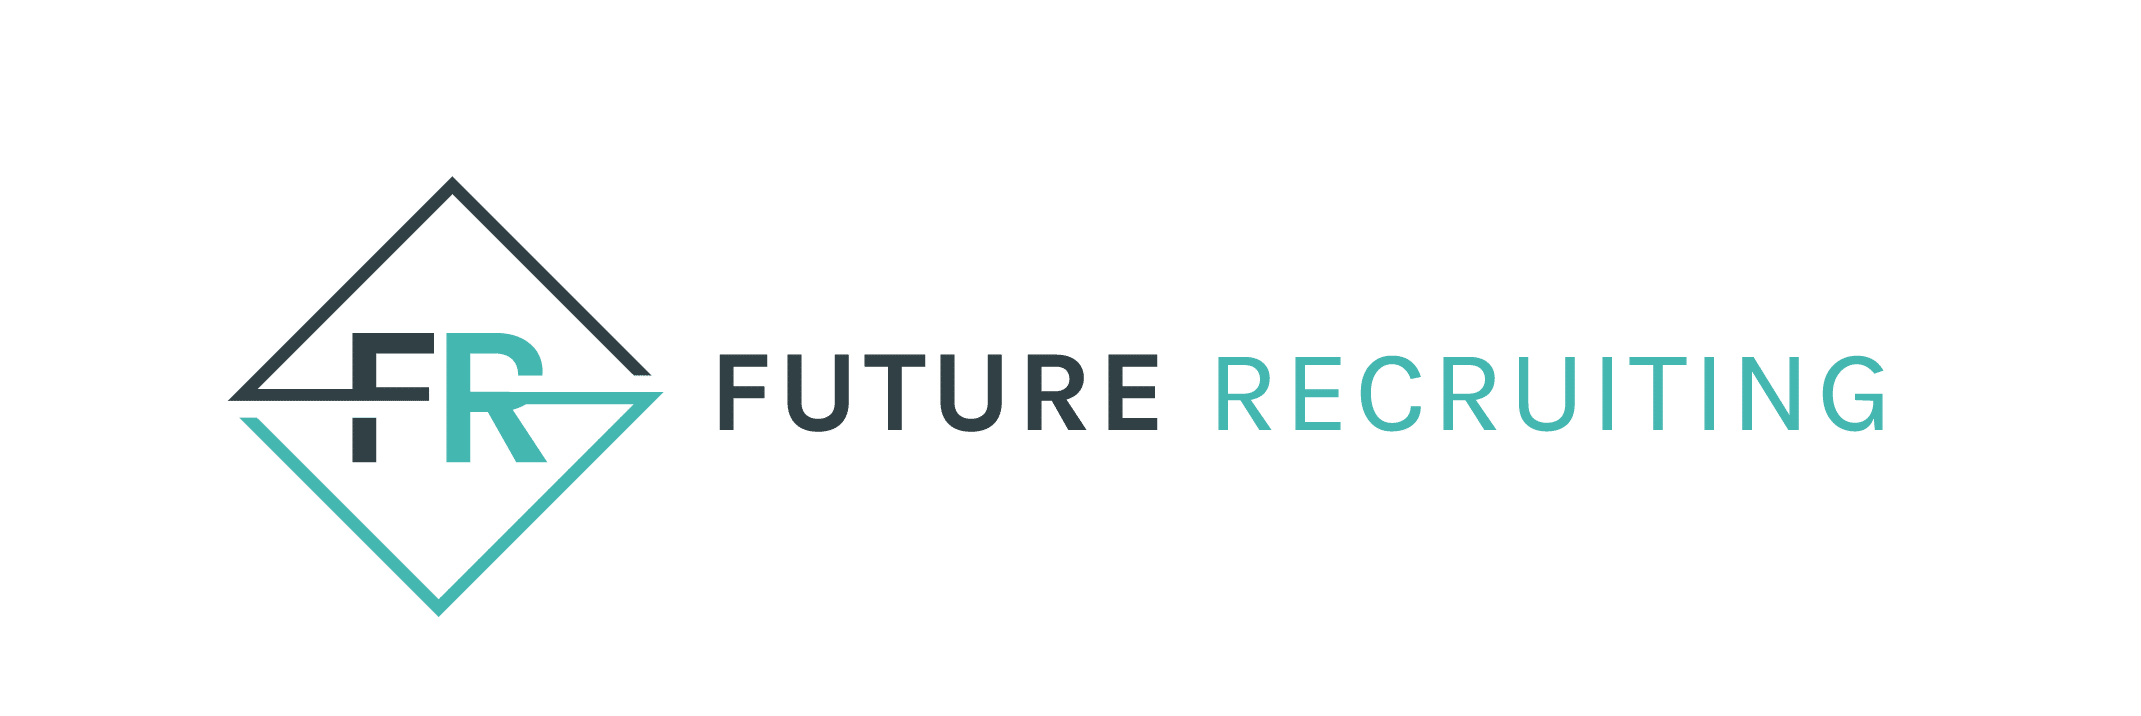 logo fr future recruiting greple